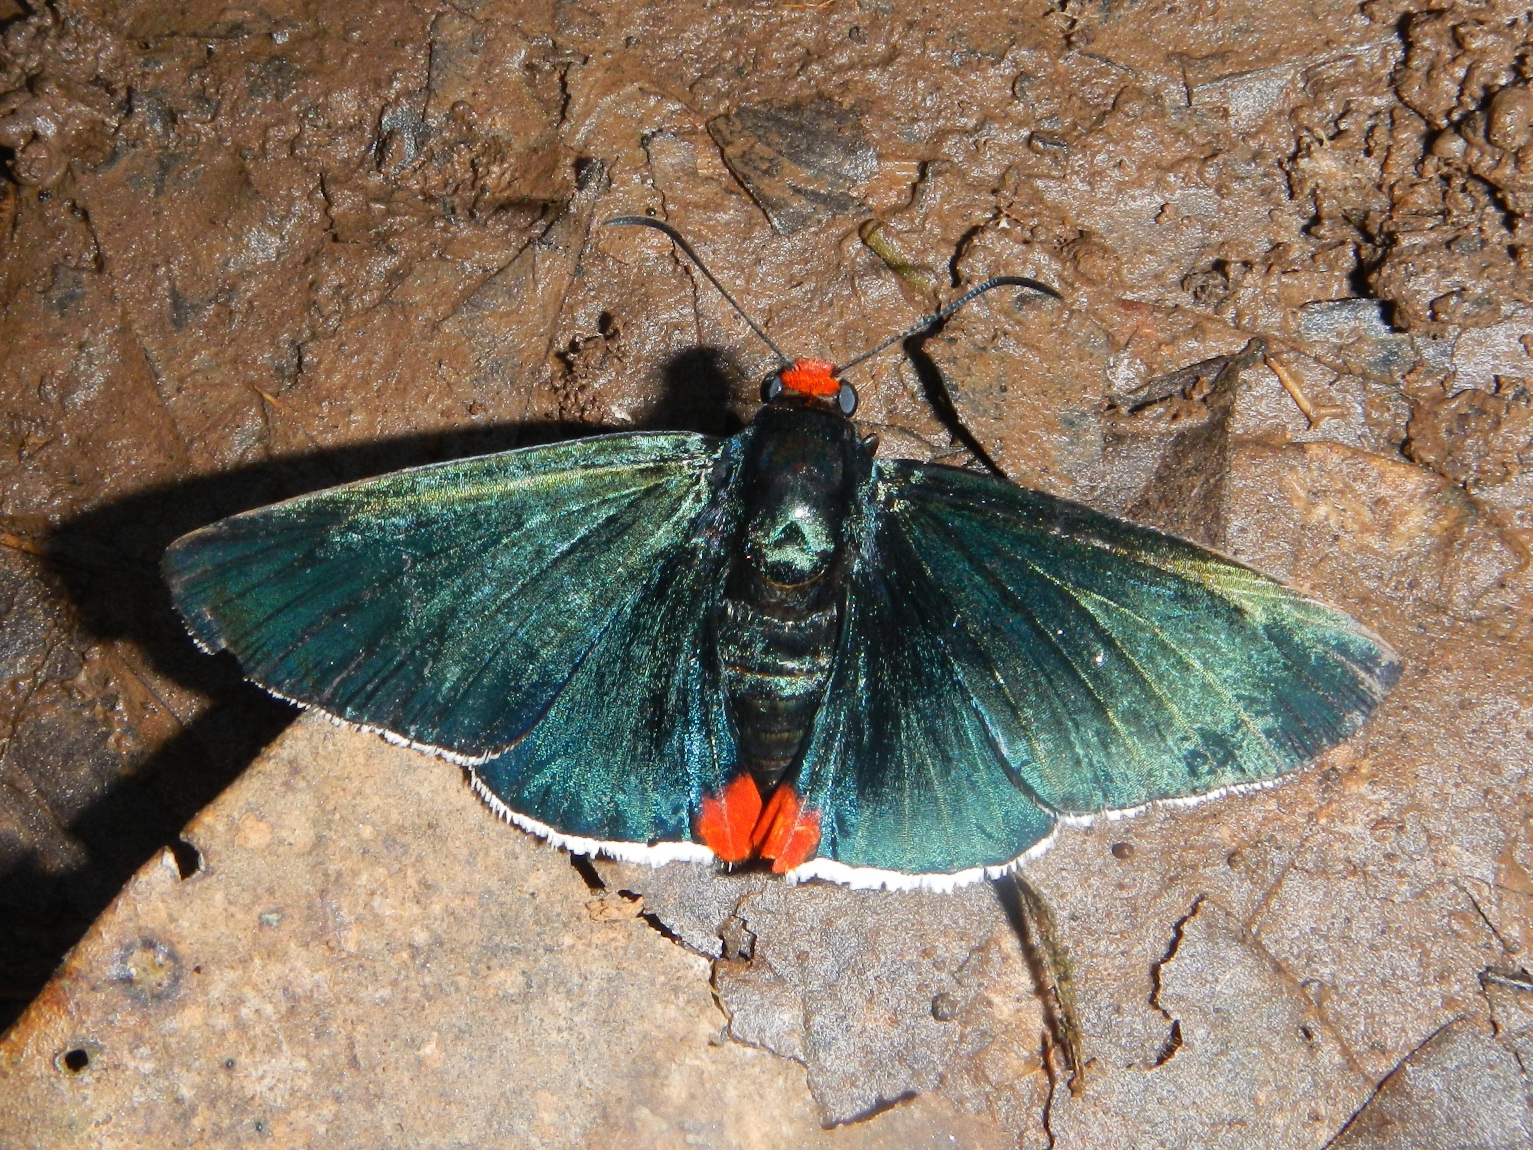  Red spotted moth, Tambopata Research Centre, Peru 